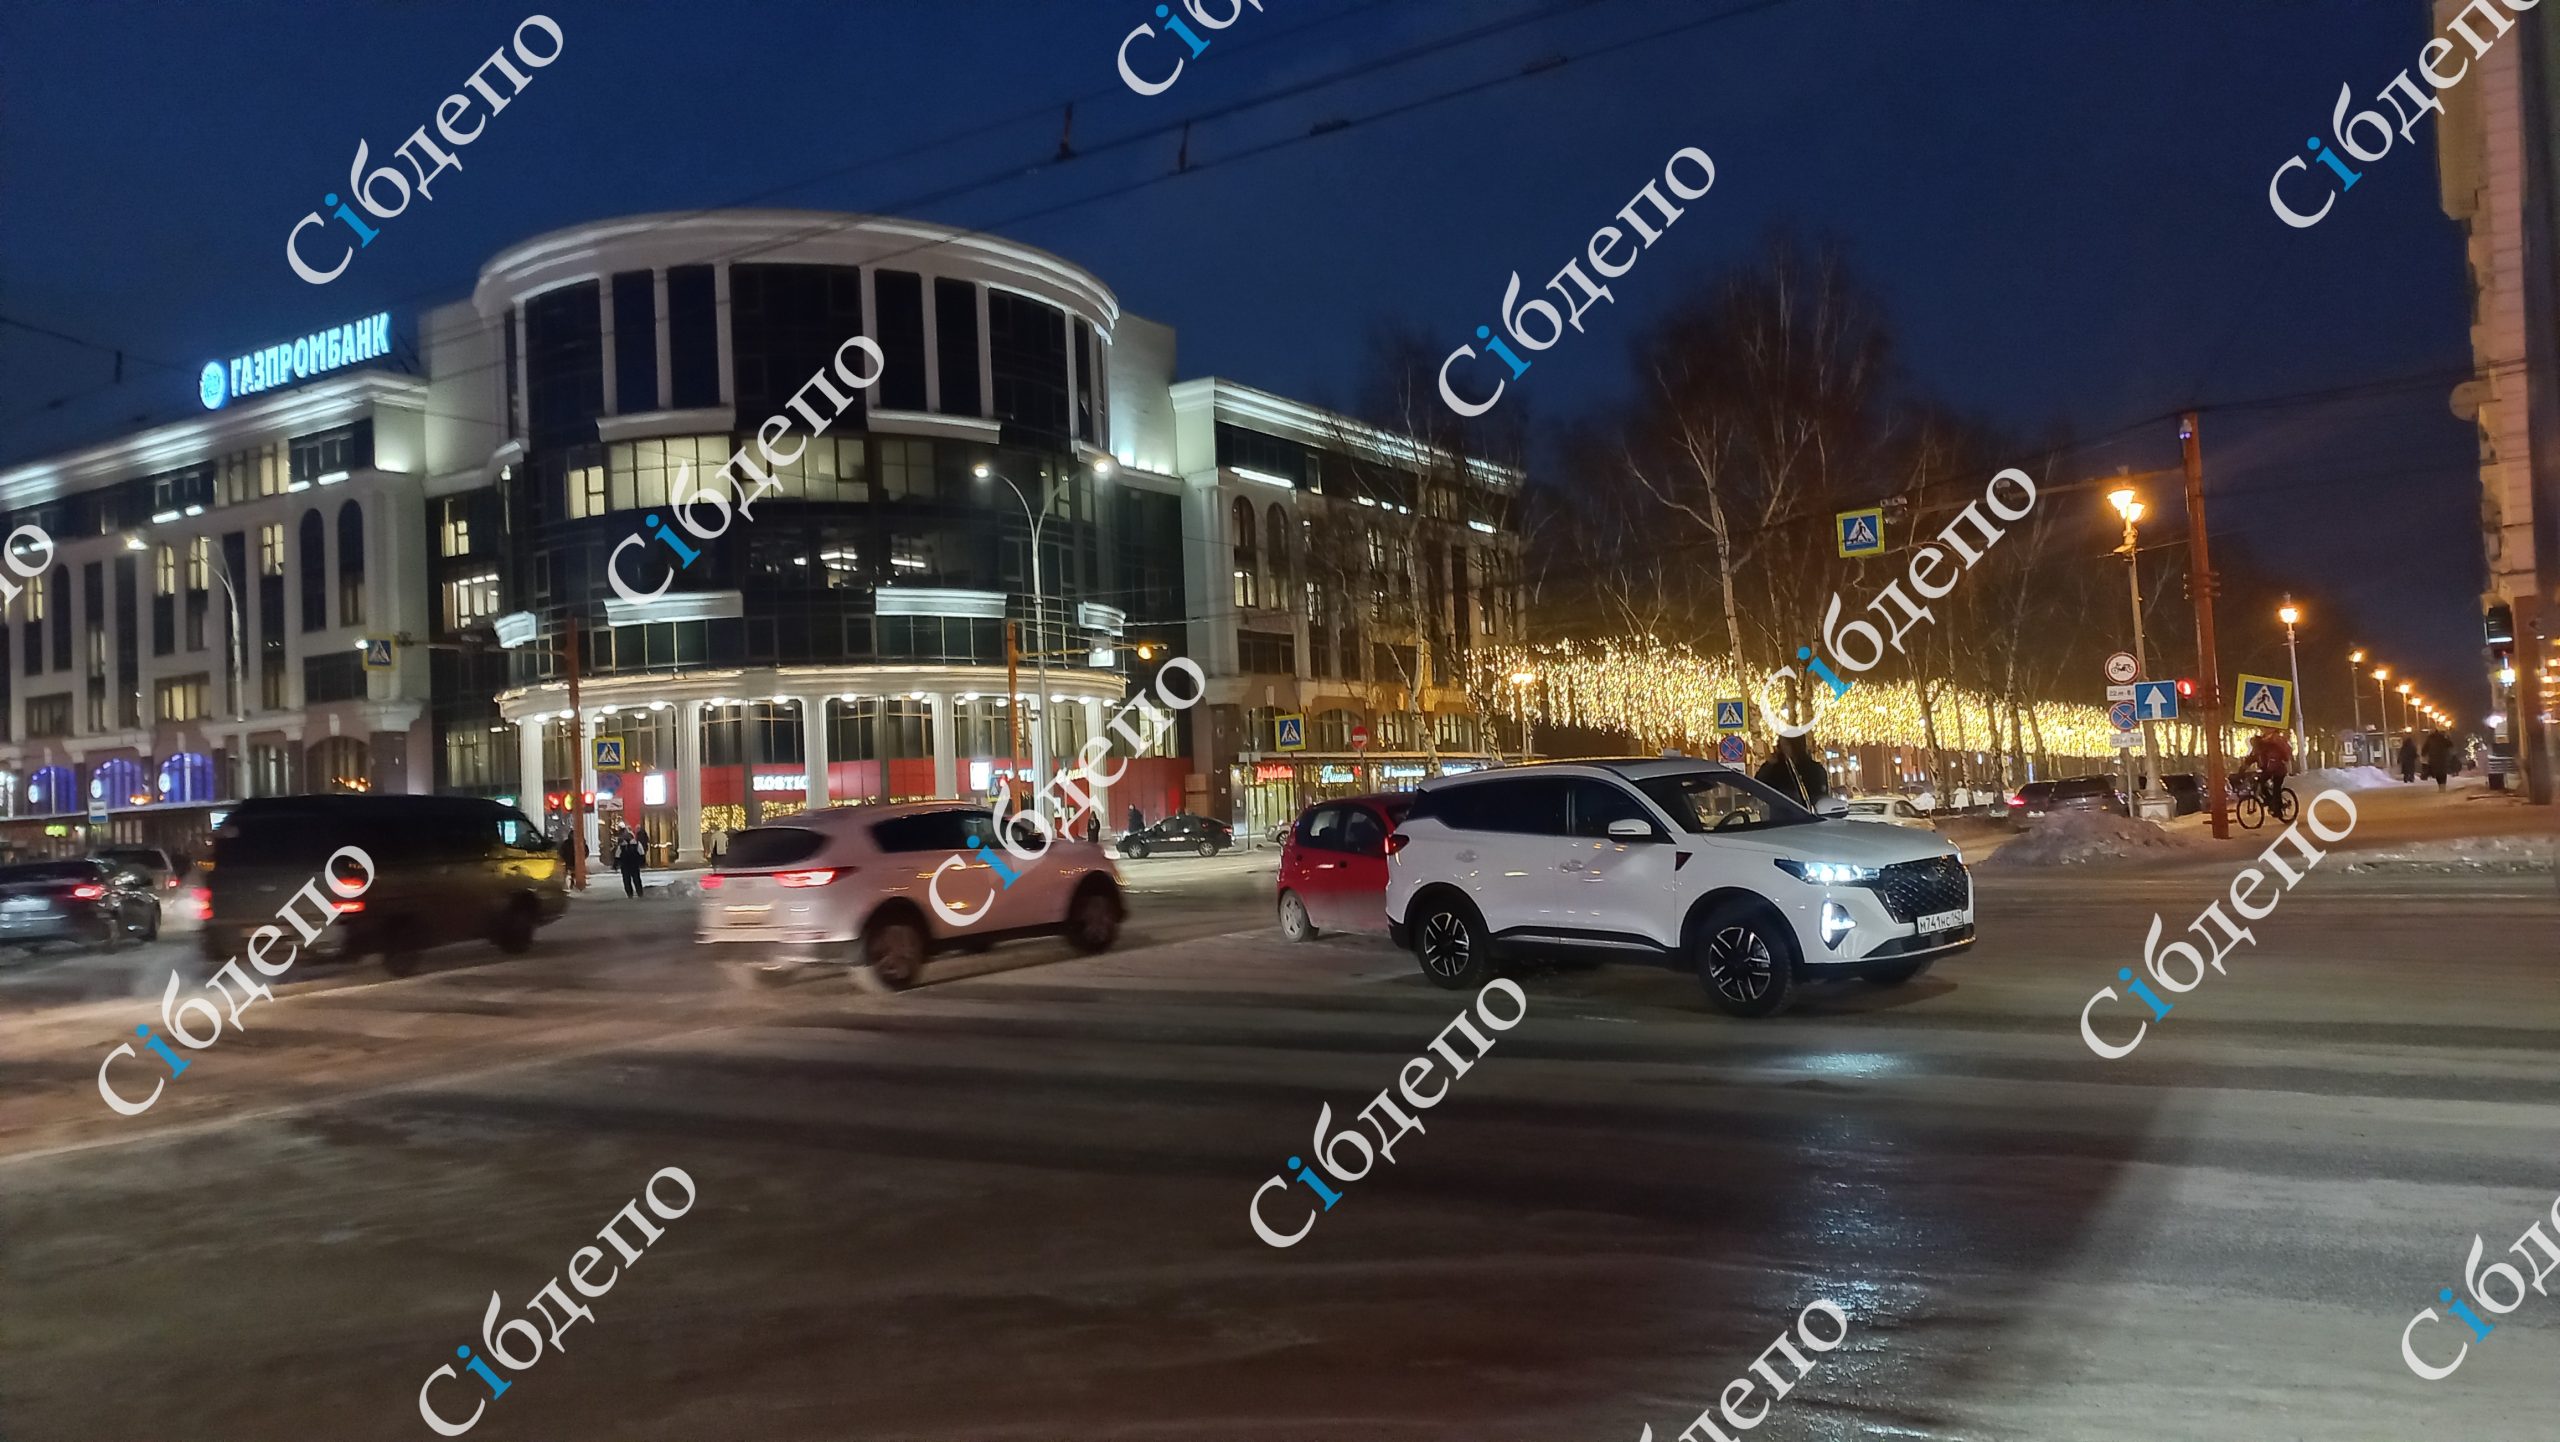 В центре Кемерова произошел инцидент с двумя машинами